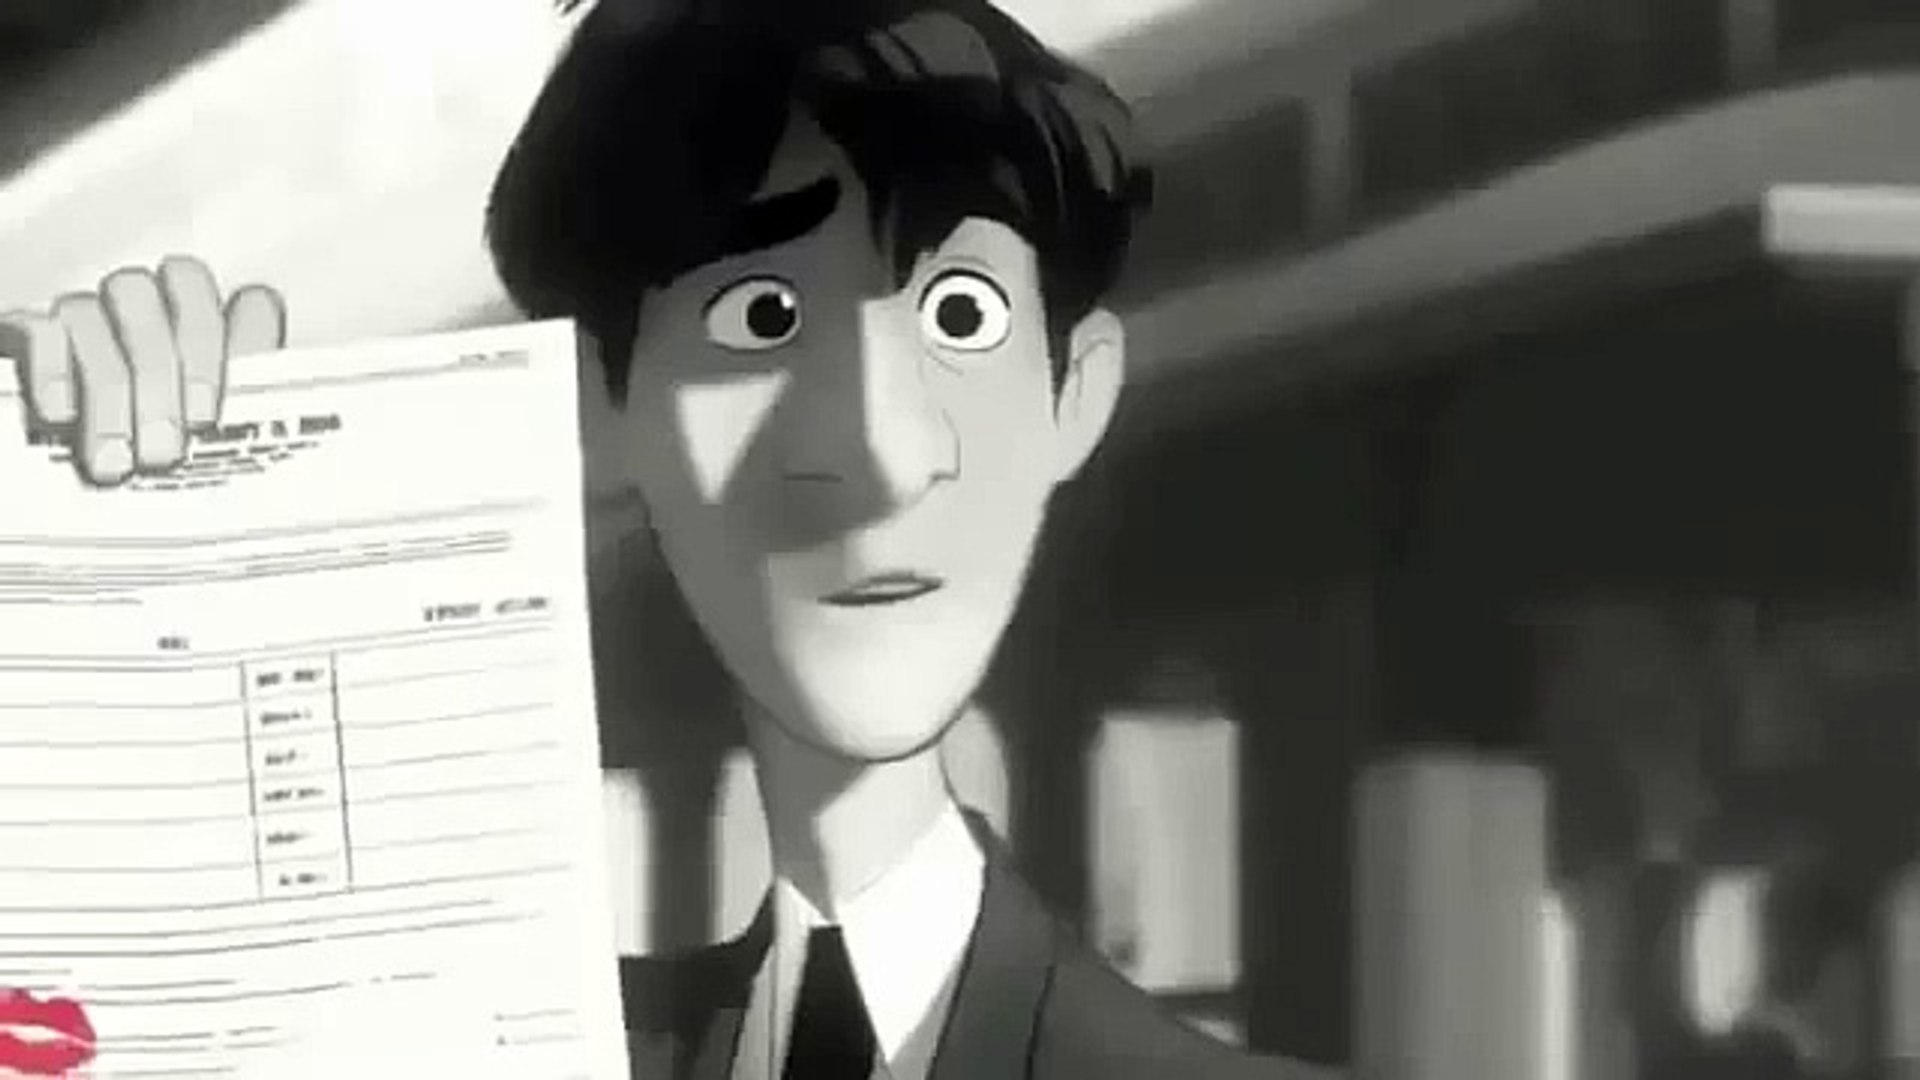 Paperman - Oscar winning animated short film - video Dailymotion